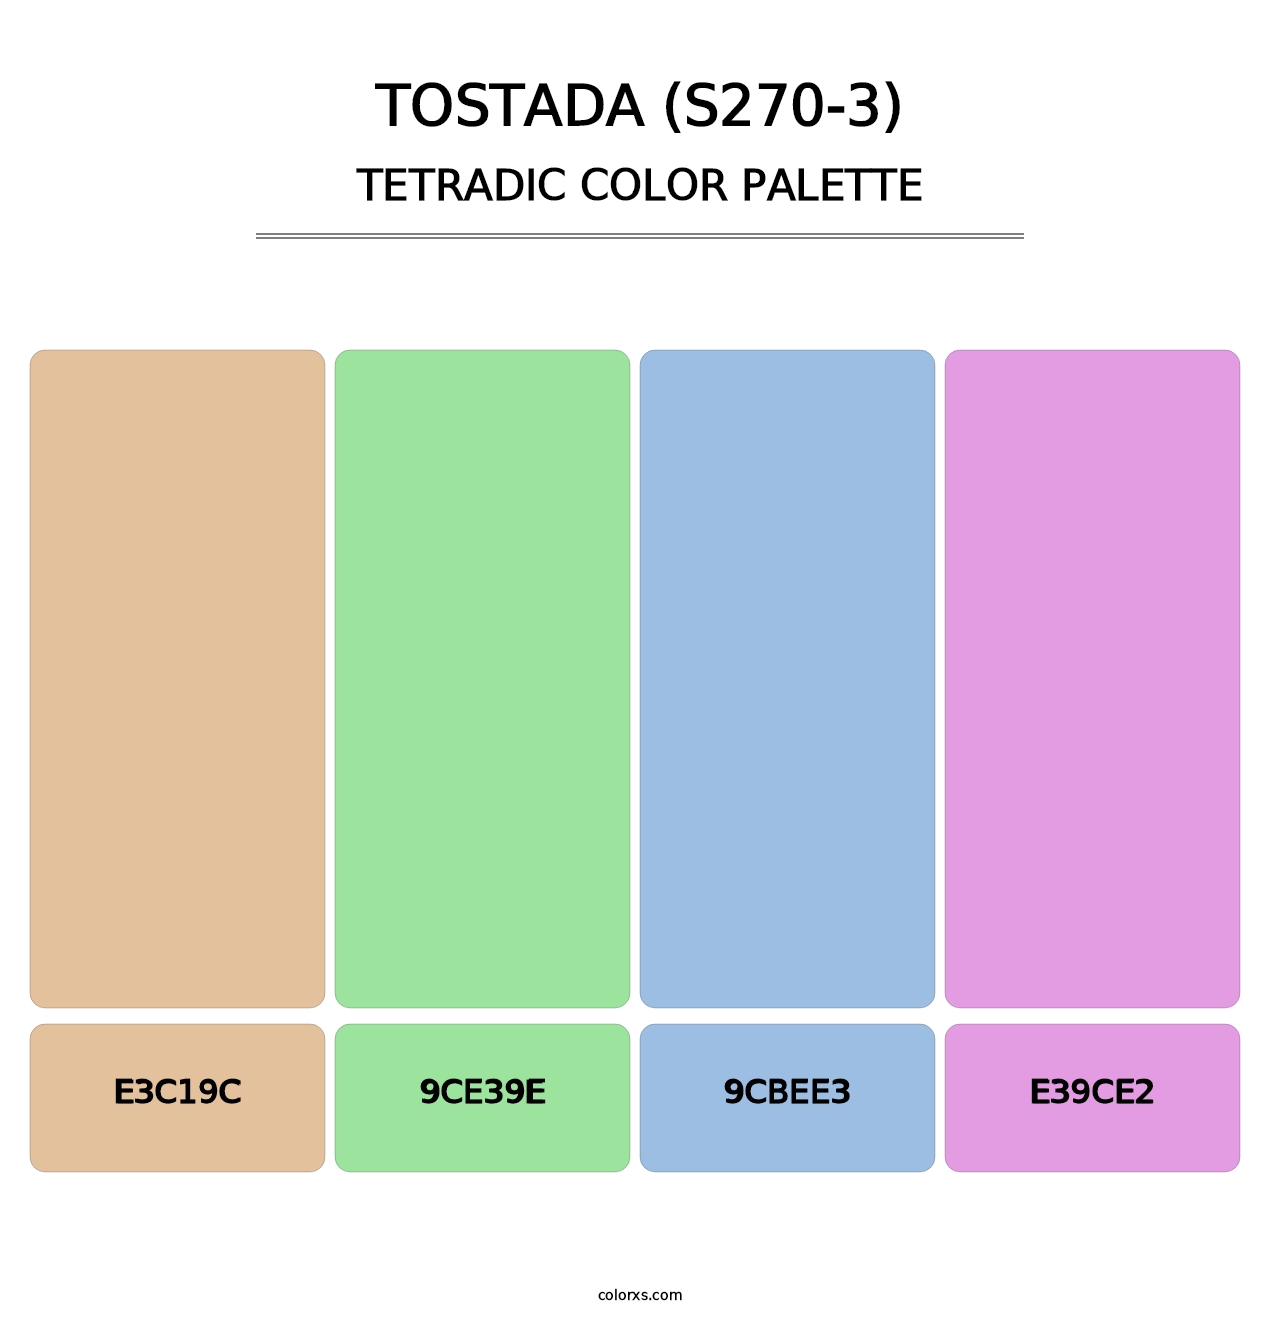 Tostada (S270-3) - Tetradic Color Palette